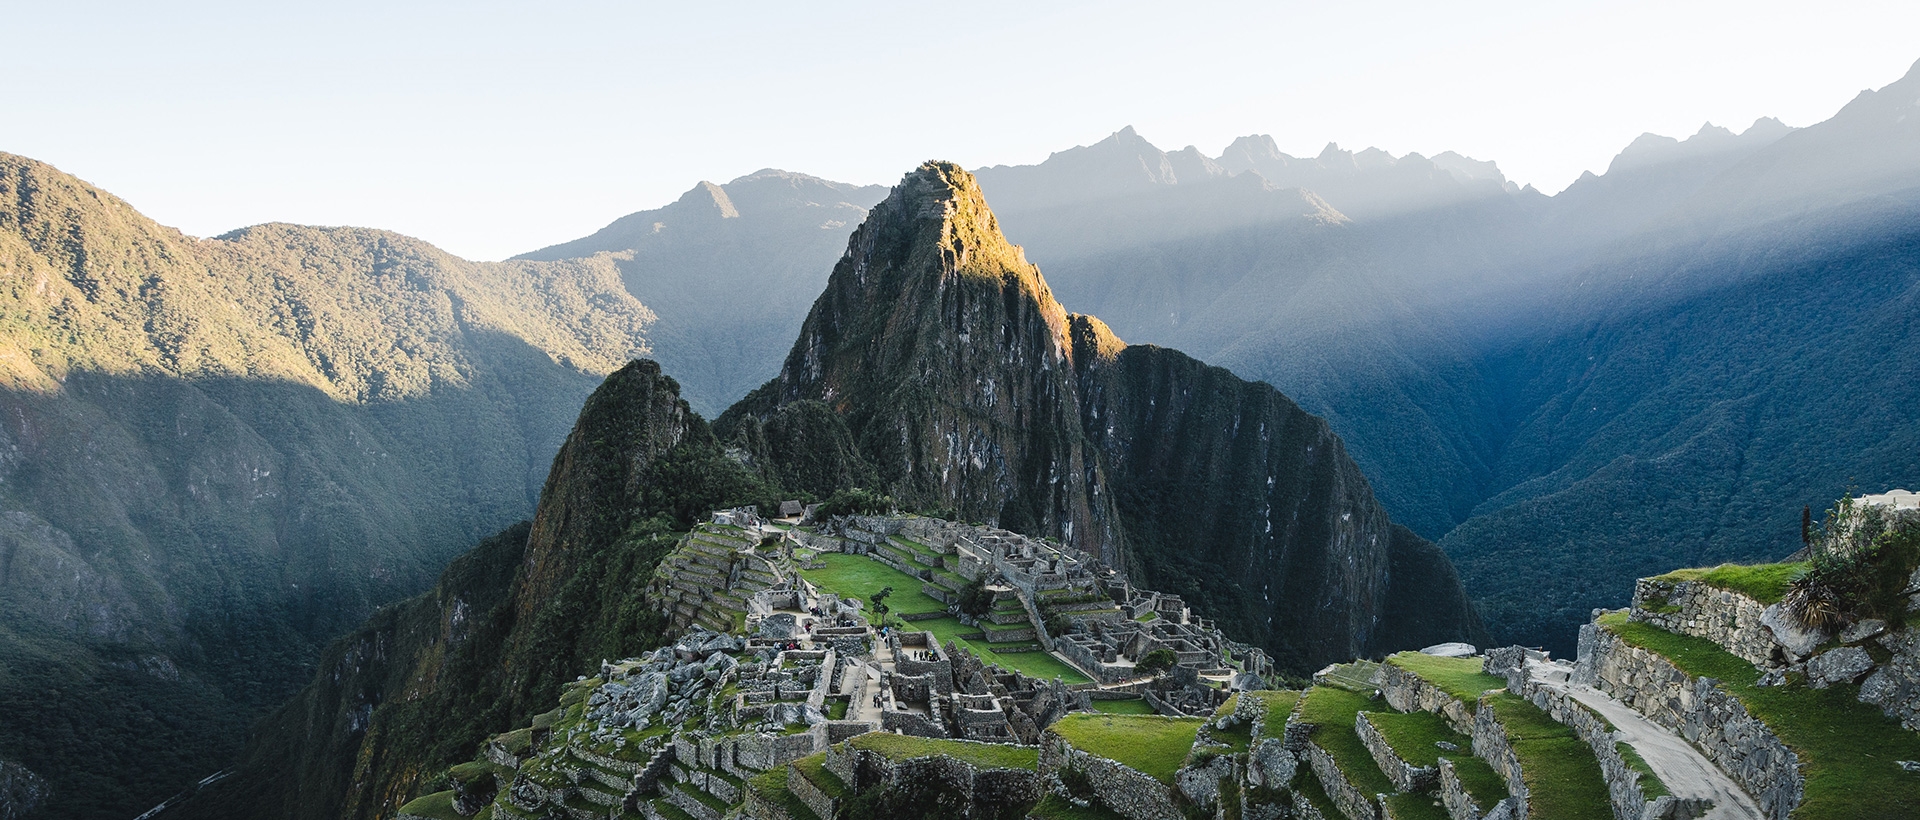 Plan your Peru trip today